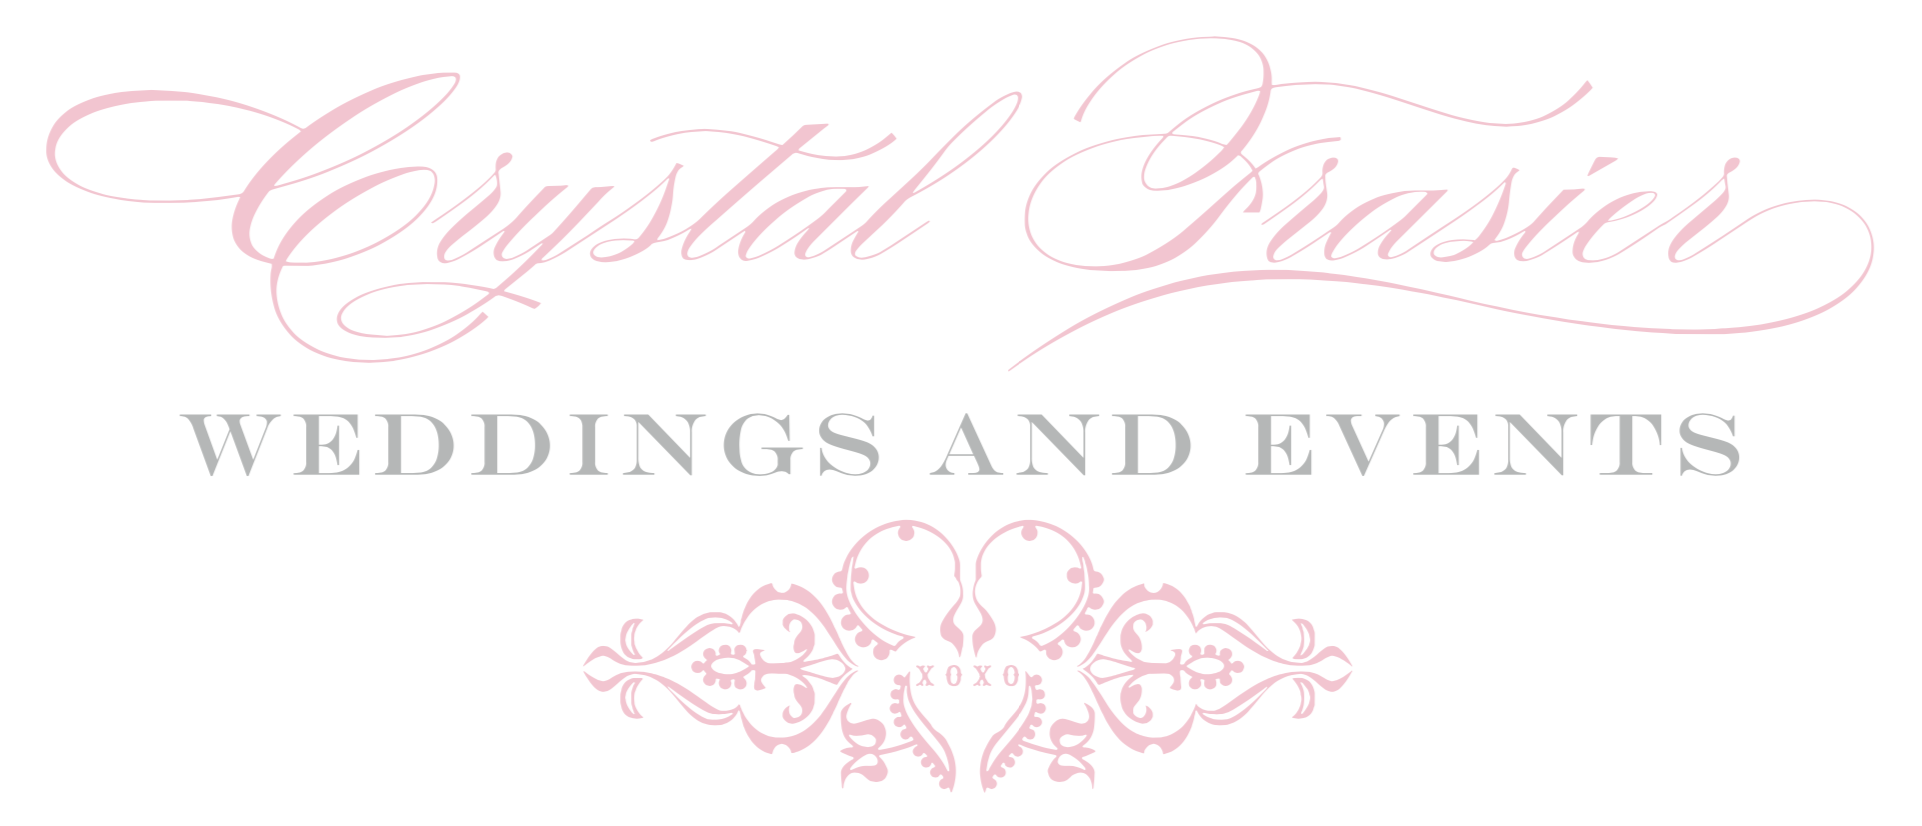 Crystal Frasier Weddings Events